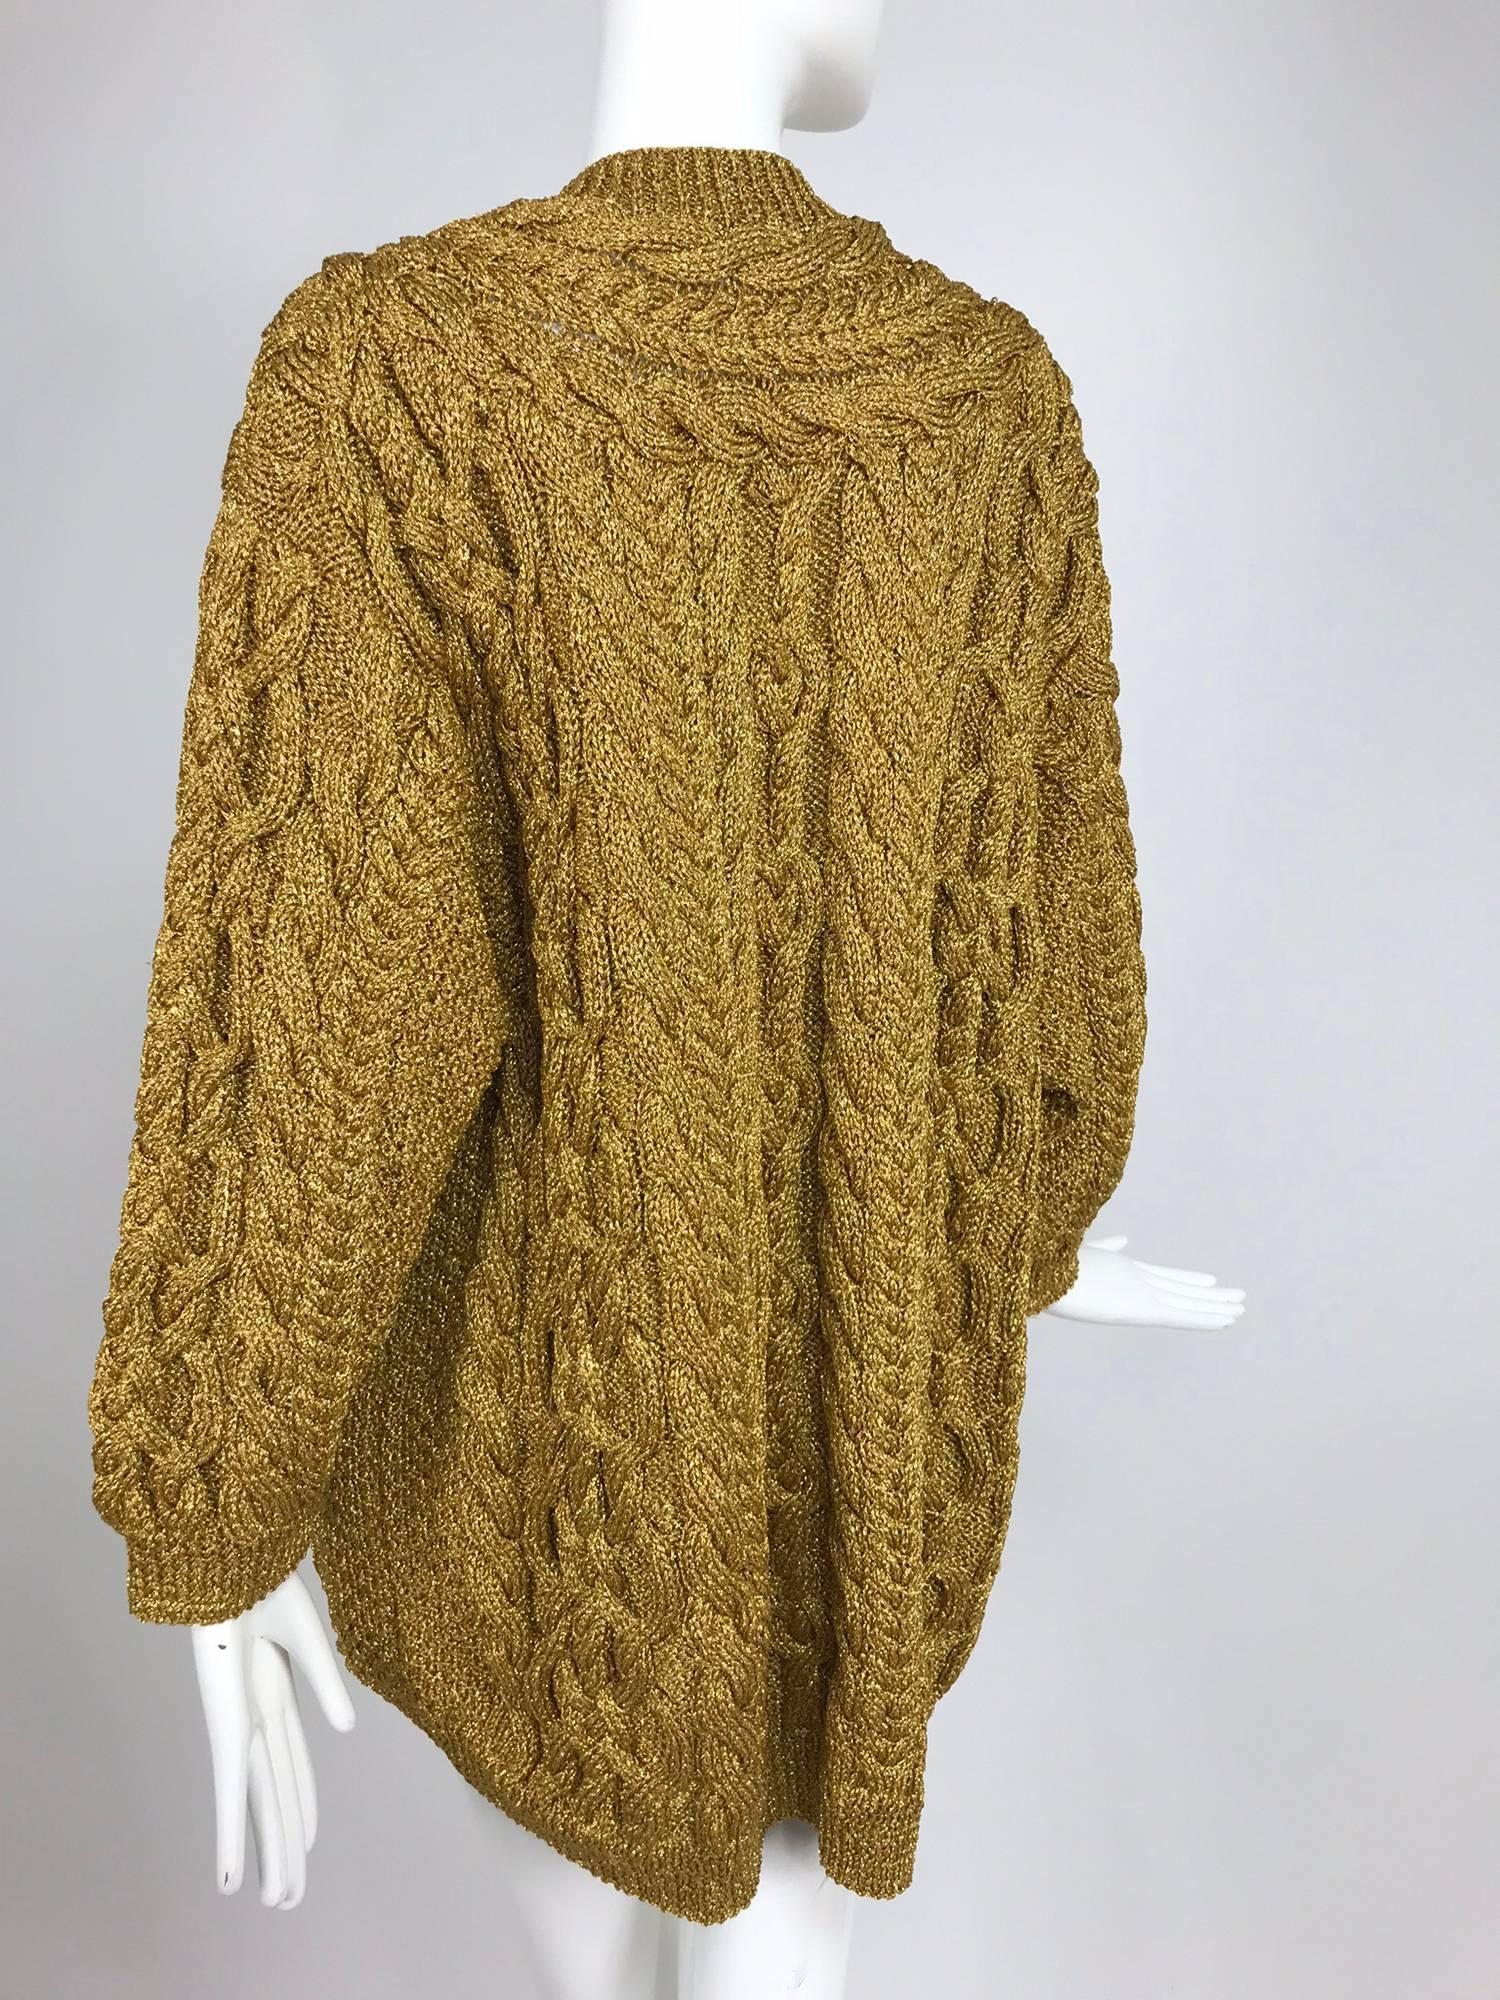 Women's Anne Klein chunky gold metallic knit cardigan sweater 1990s